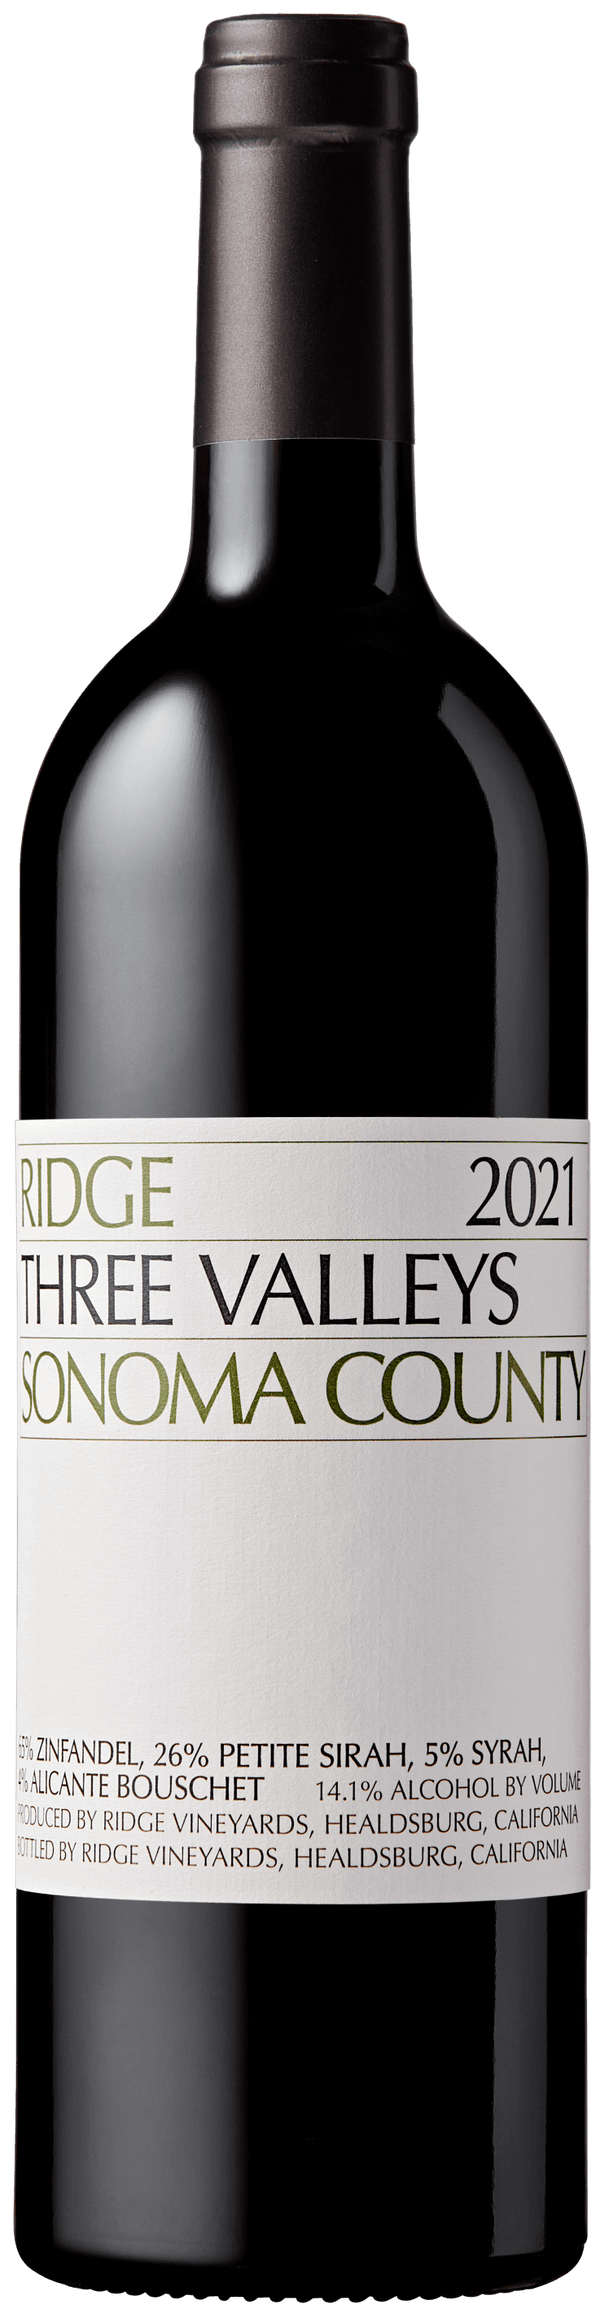 Ridge Vineyards Three Valleys Sonoma County Red 2021 750ml